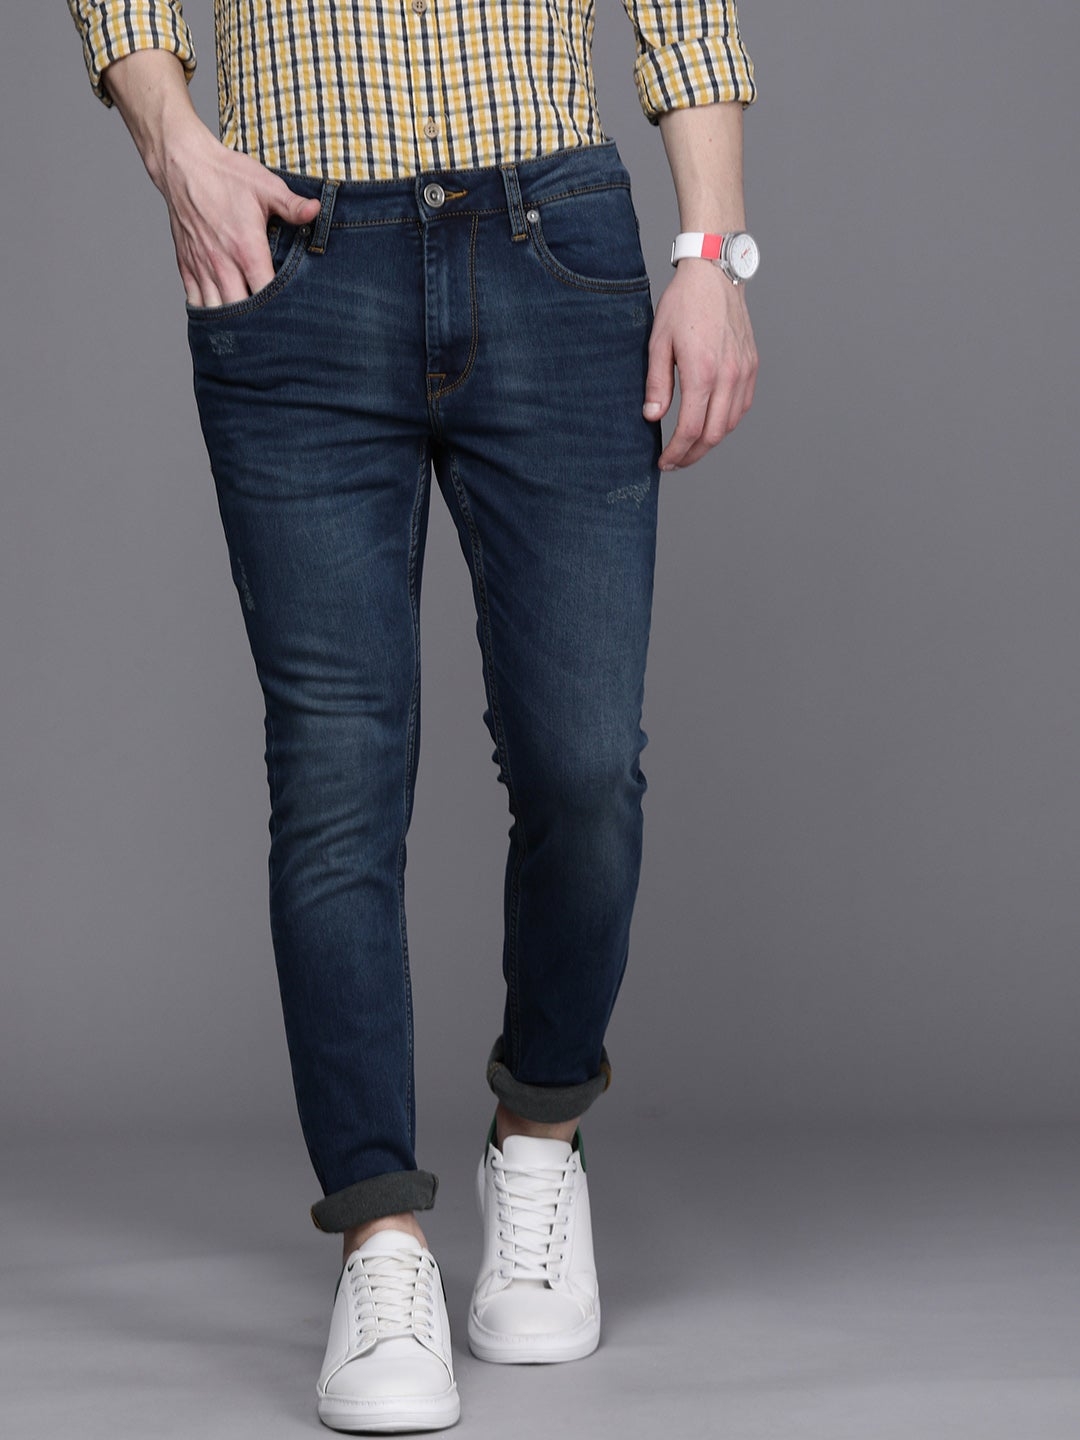 Voi Jeans | Men's Light Indigo track Skinny Stretchable Jeans (VOJN1635)